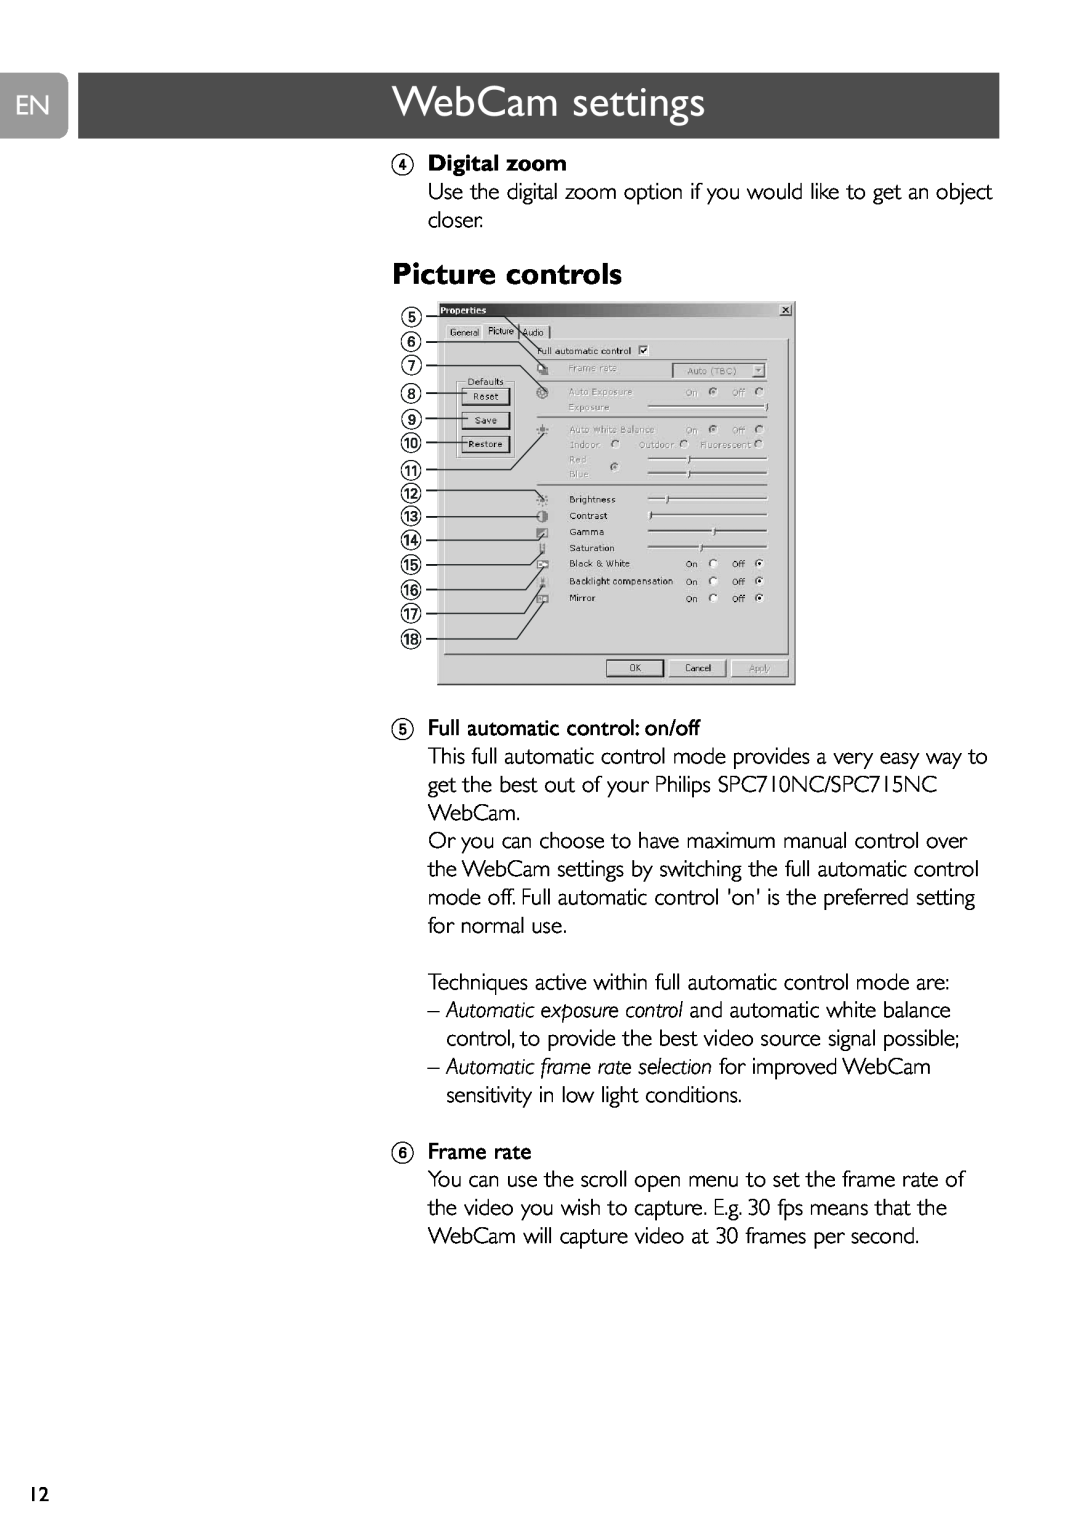 Philips SPC710NC, SPC715NC user manual Picture controls, WebCam settings, Digital zoom 